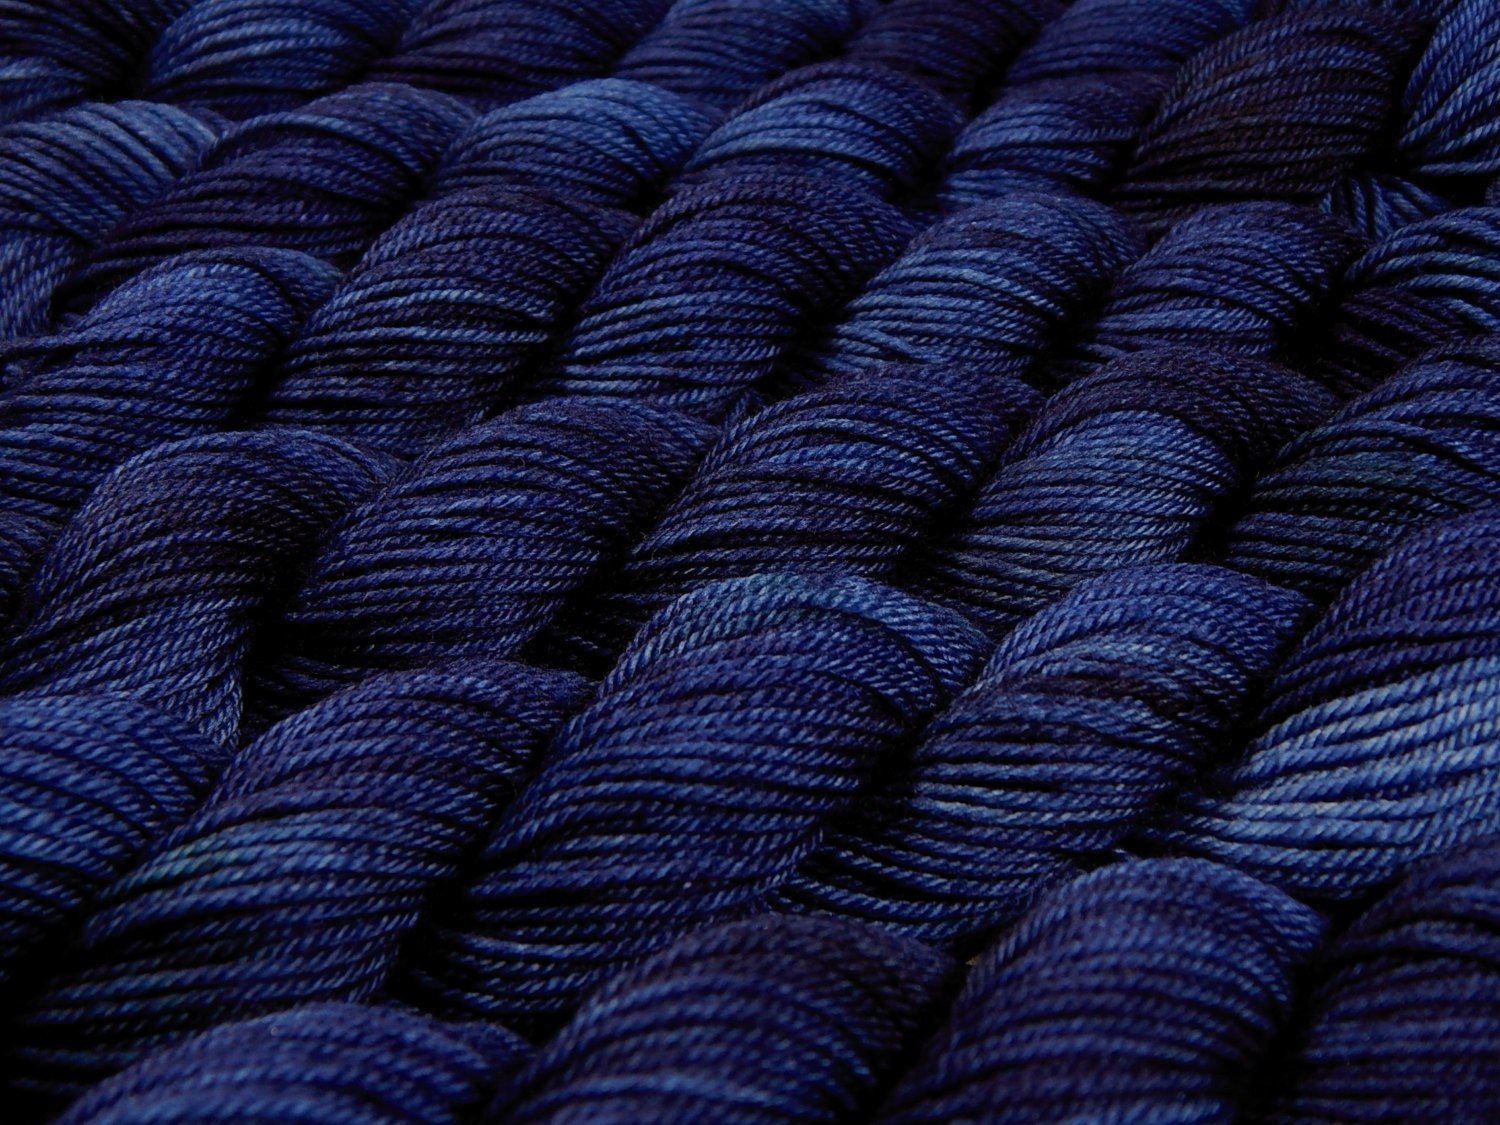 Yarn Mini Skeins, Hand Dyed Yarn, Sock Weight 4 Ply Superwash Merino Wool - Ink Tonal - Navy Blue Fingering Weight Yarn, Indie Dyer Yarns